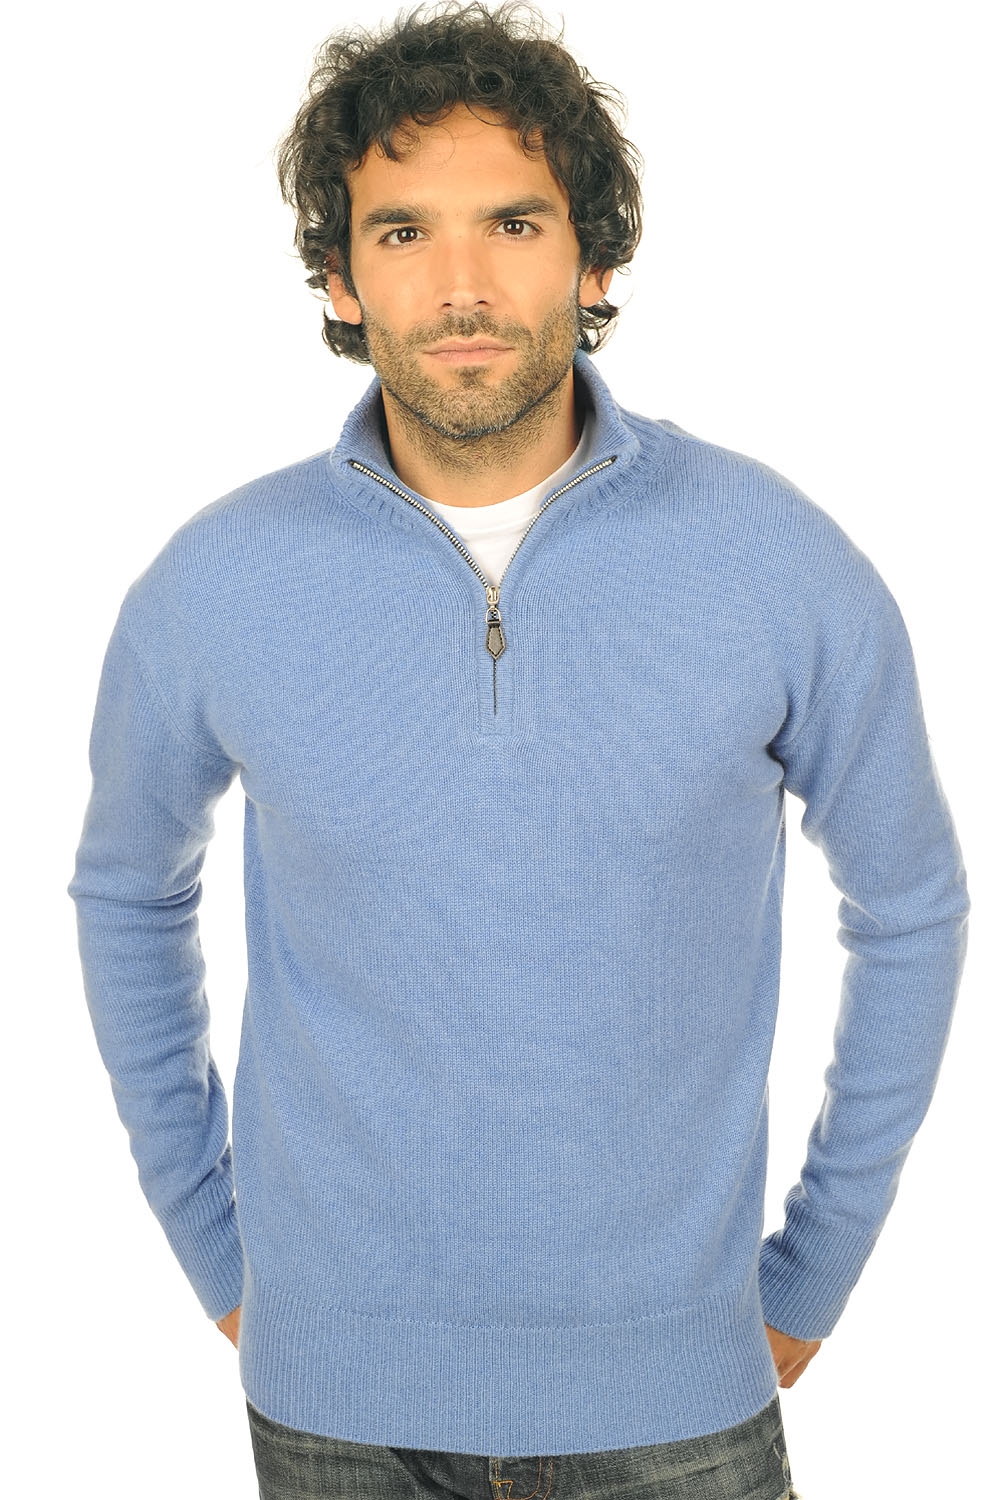 Cashmere men chunky sweater donovan blue chine l